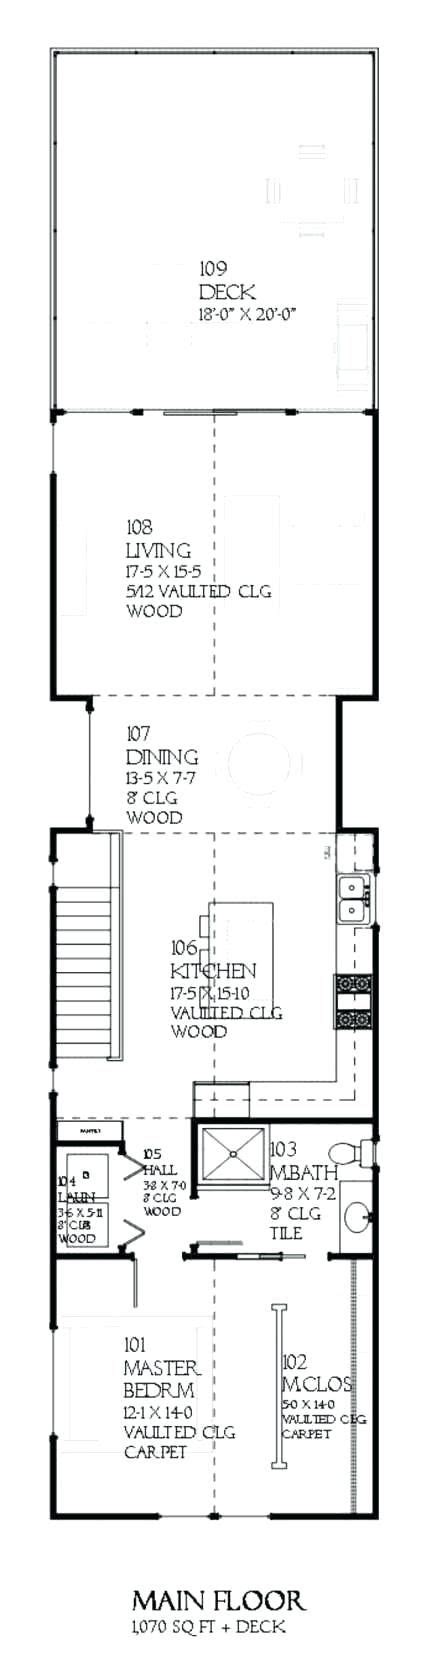 amish house plans garage home floor plans   master bedroom blueprints house plans ami